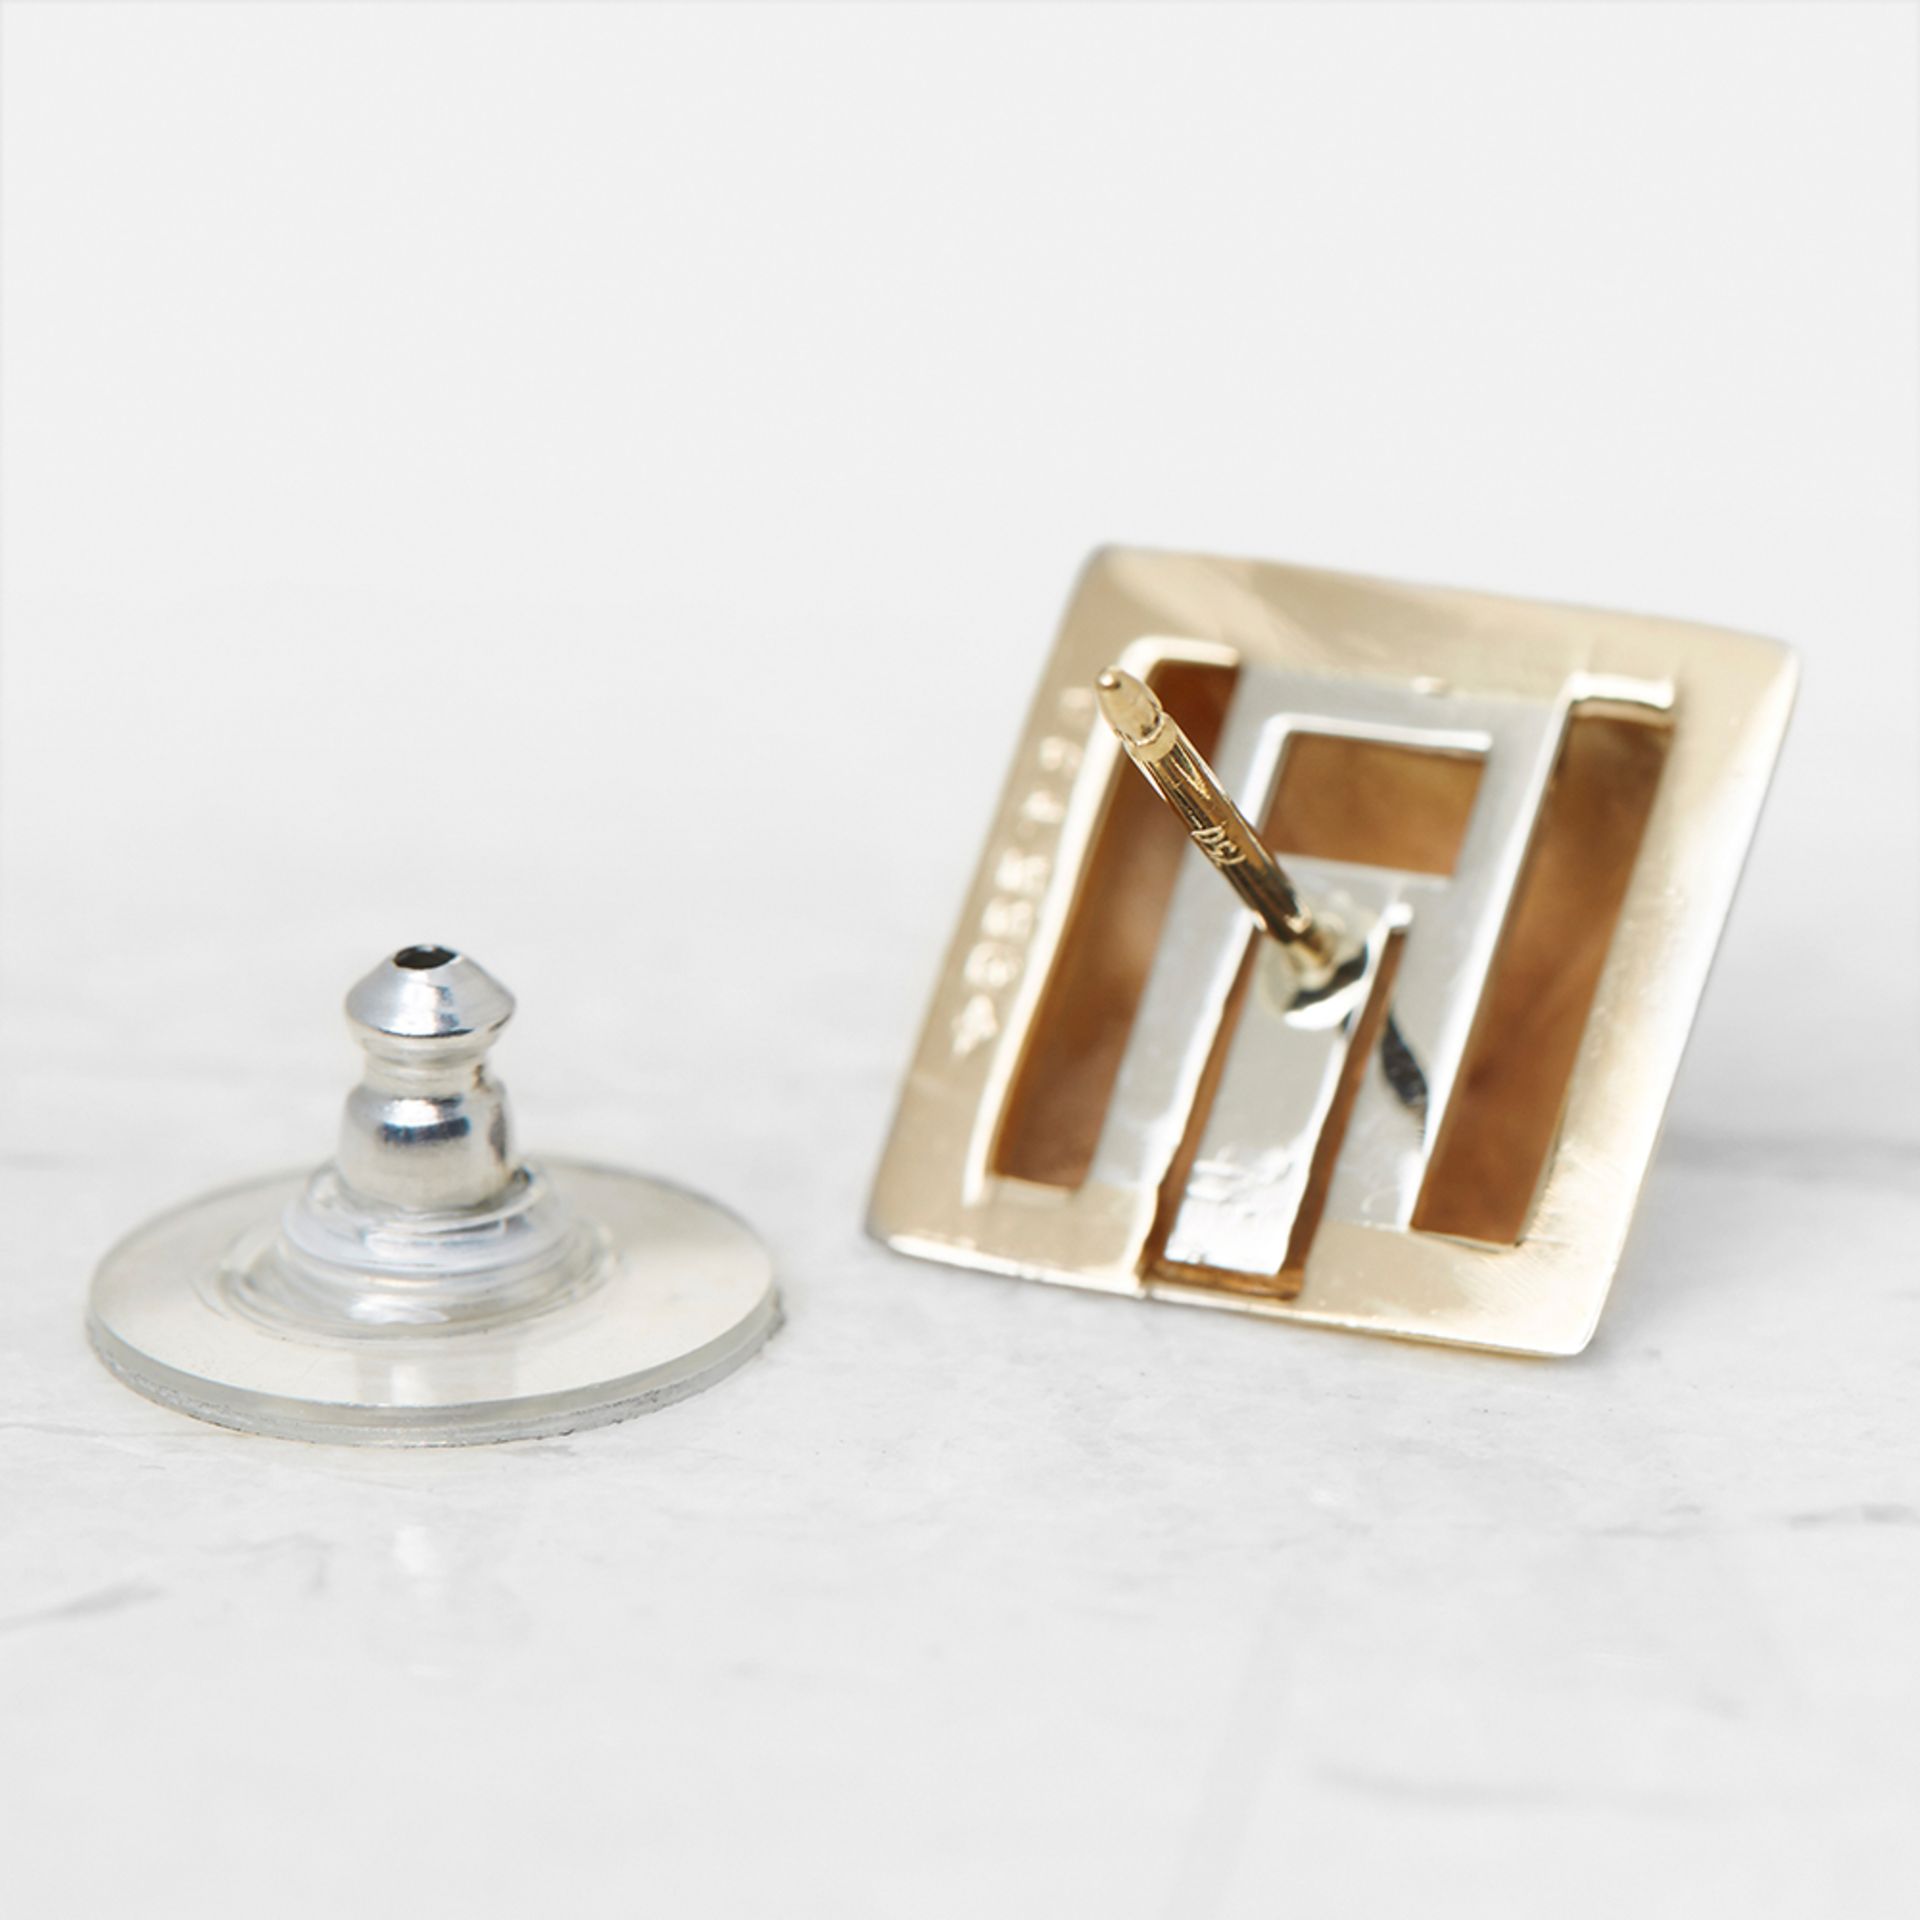 Van Cleef & Arpels 18k Yellow Gold Pyramid Style Earrings - Image 5 of 6